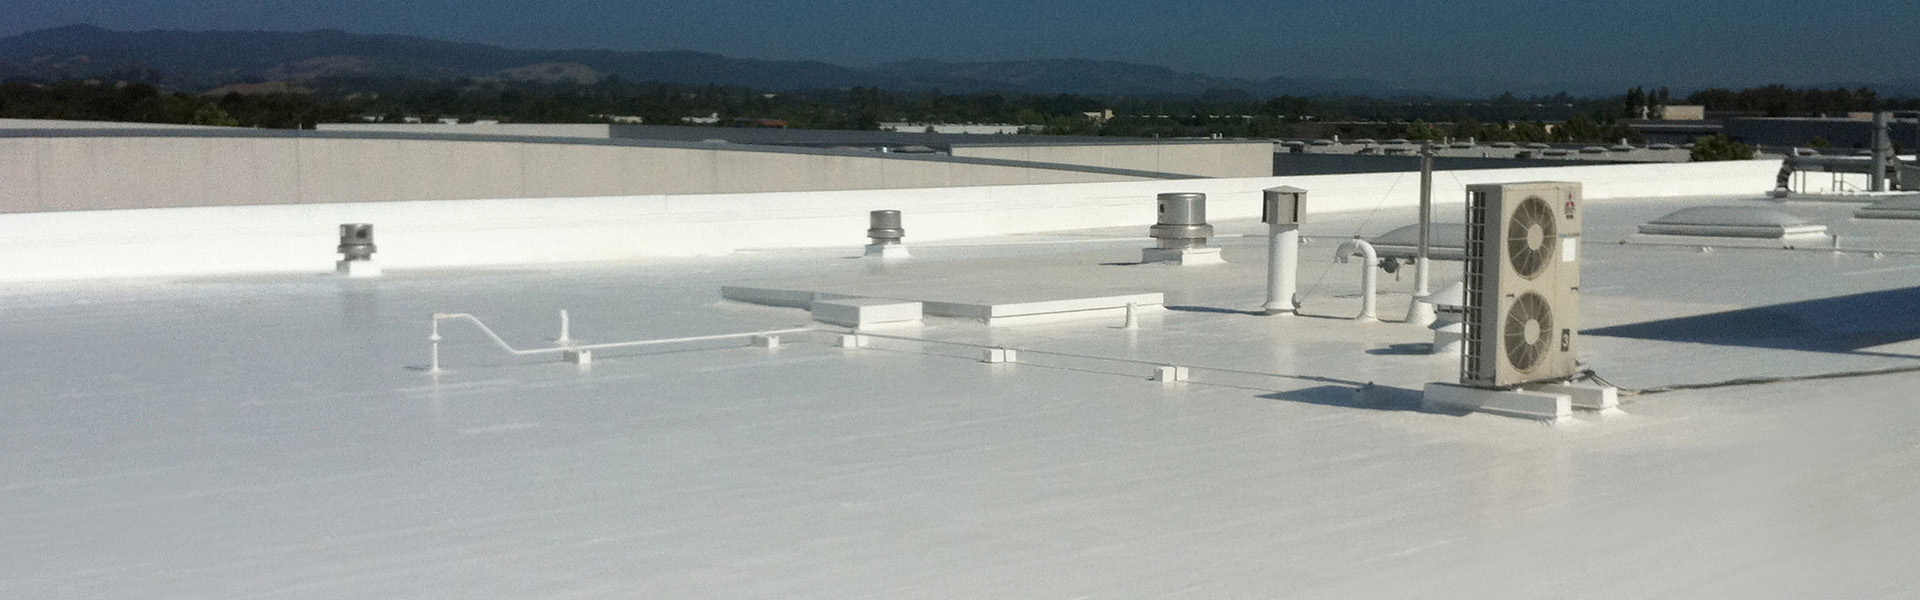 Spray foam insulation san antonio spray roof coating san antonio commercial roofing san antonio TPO roofing san antonio PVC roofing san antonio